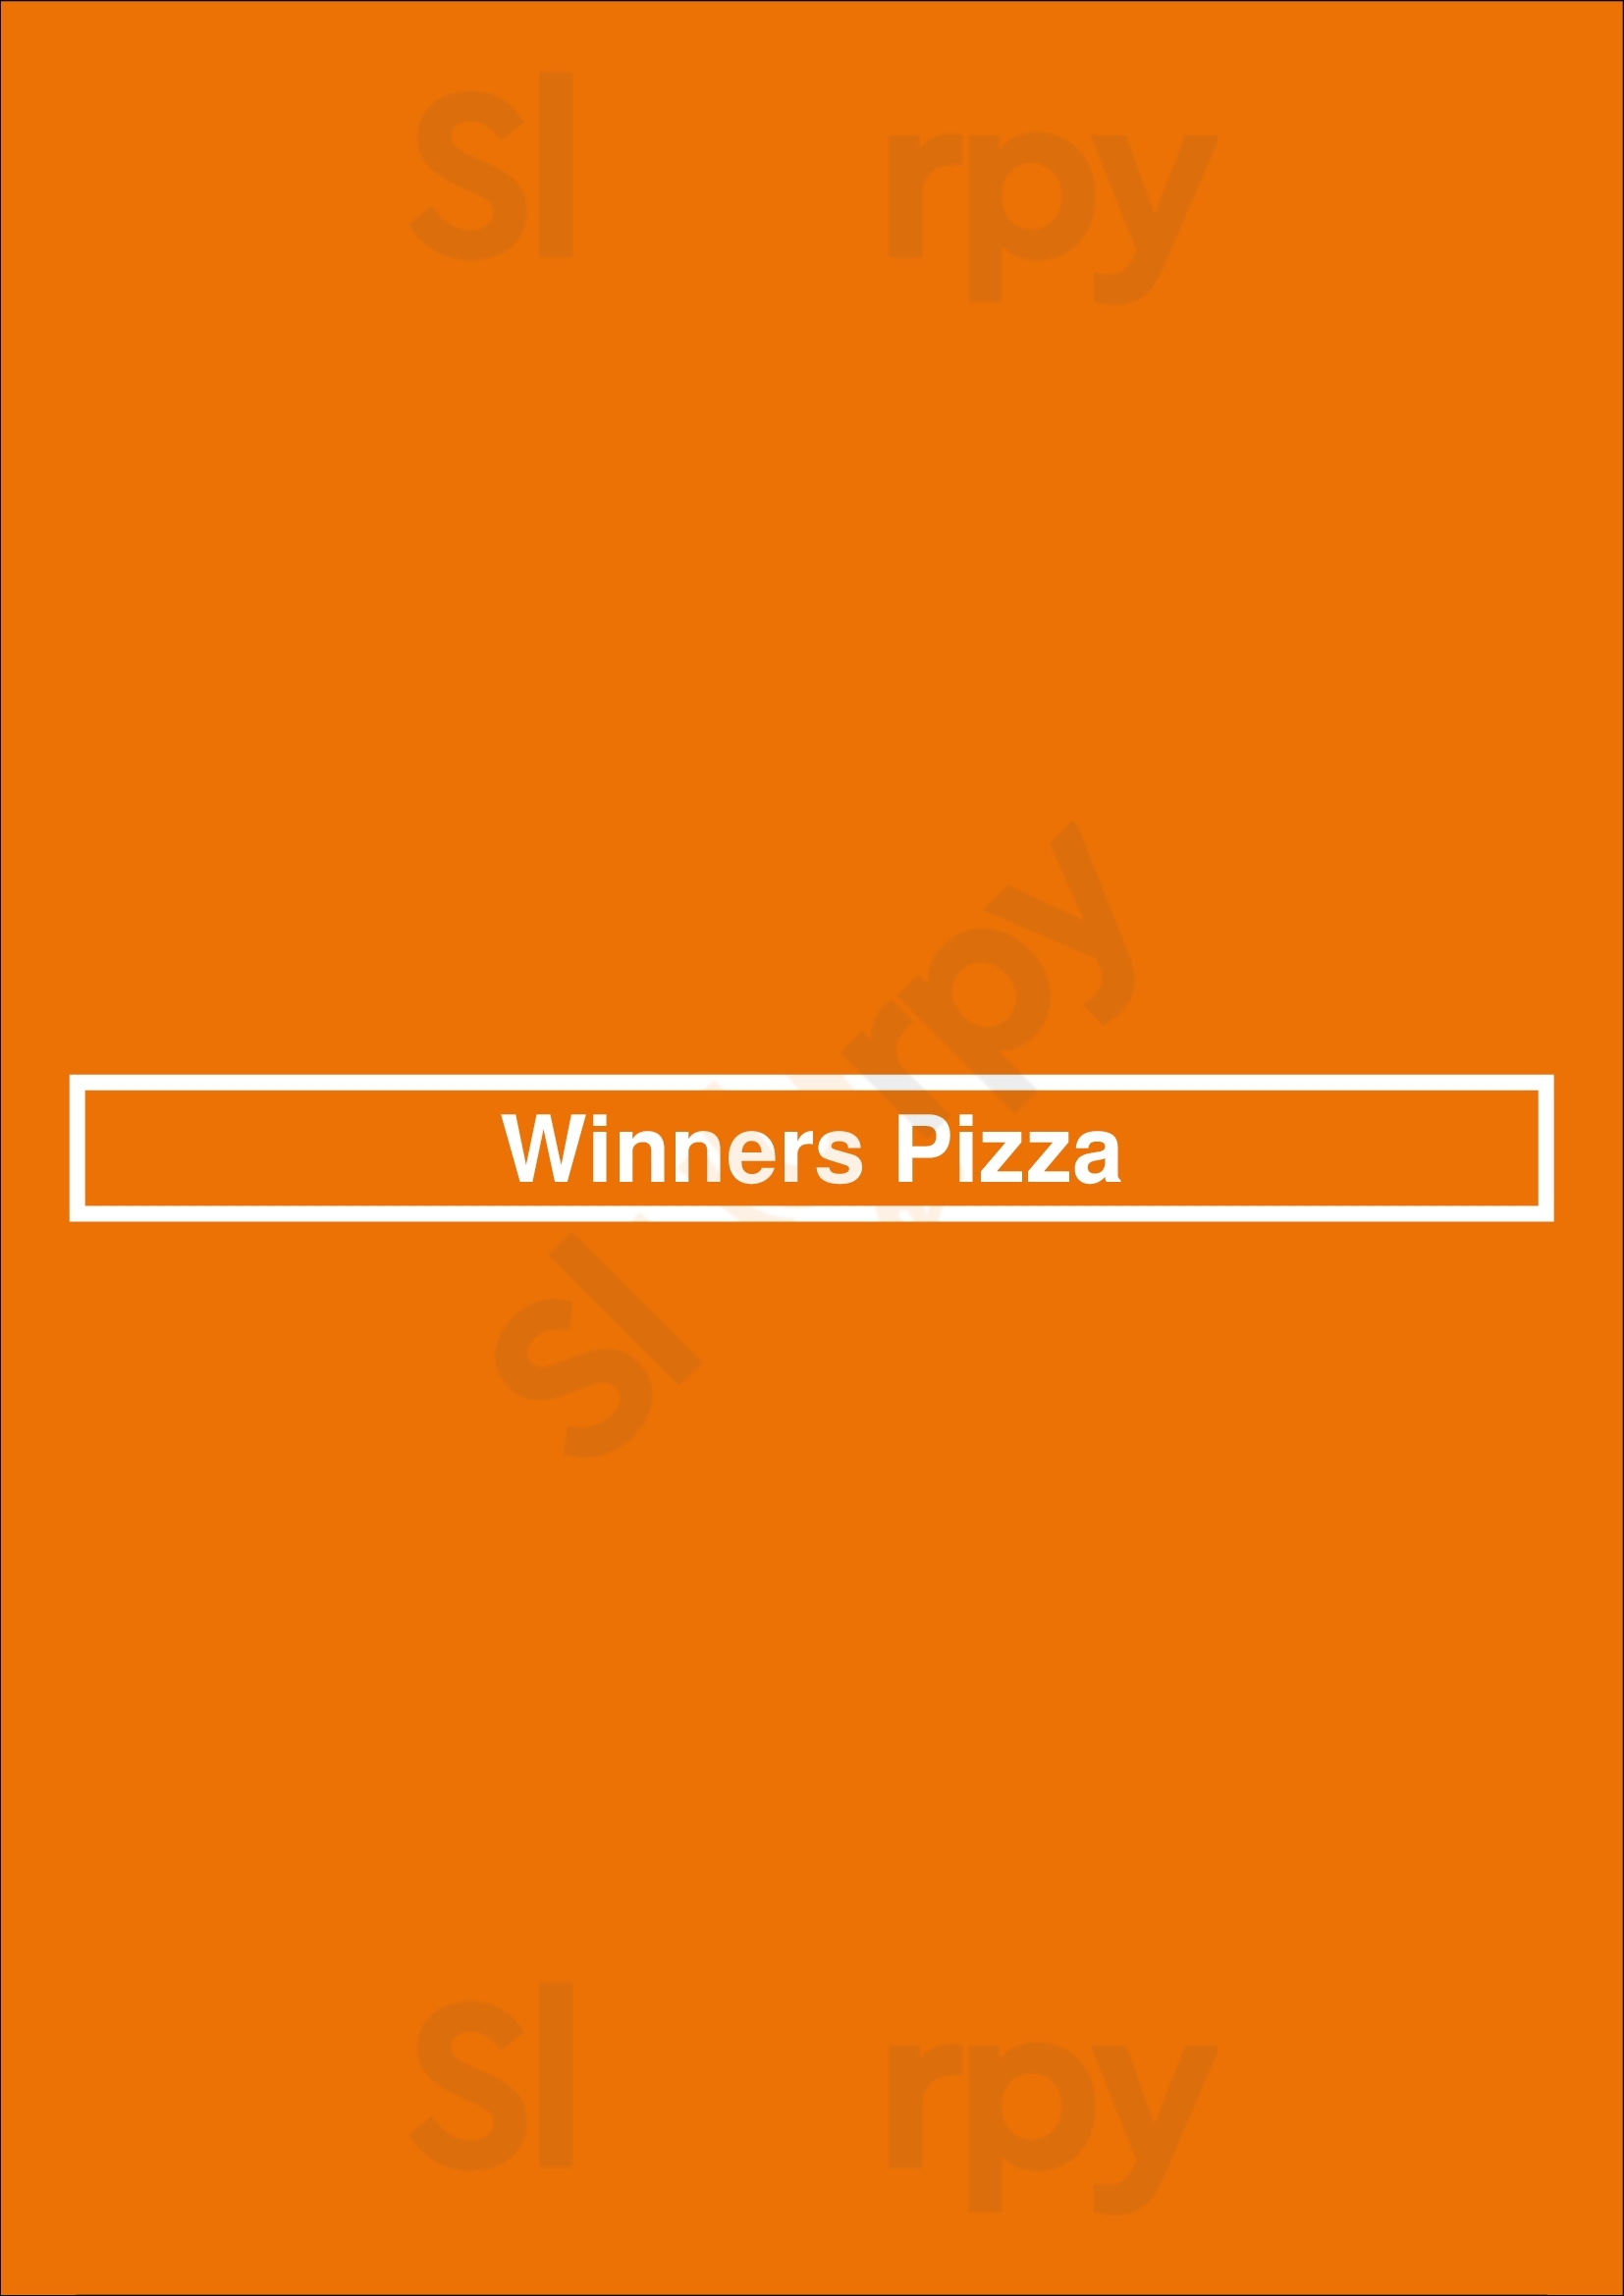 Winners Pizza Houston Menu - 1